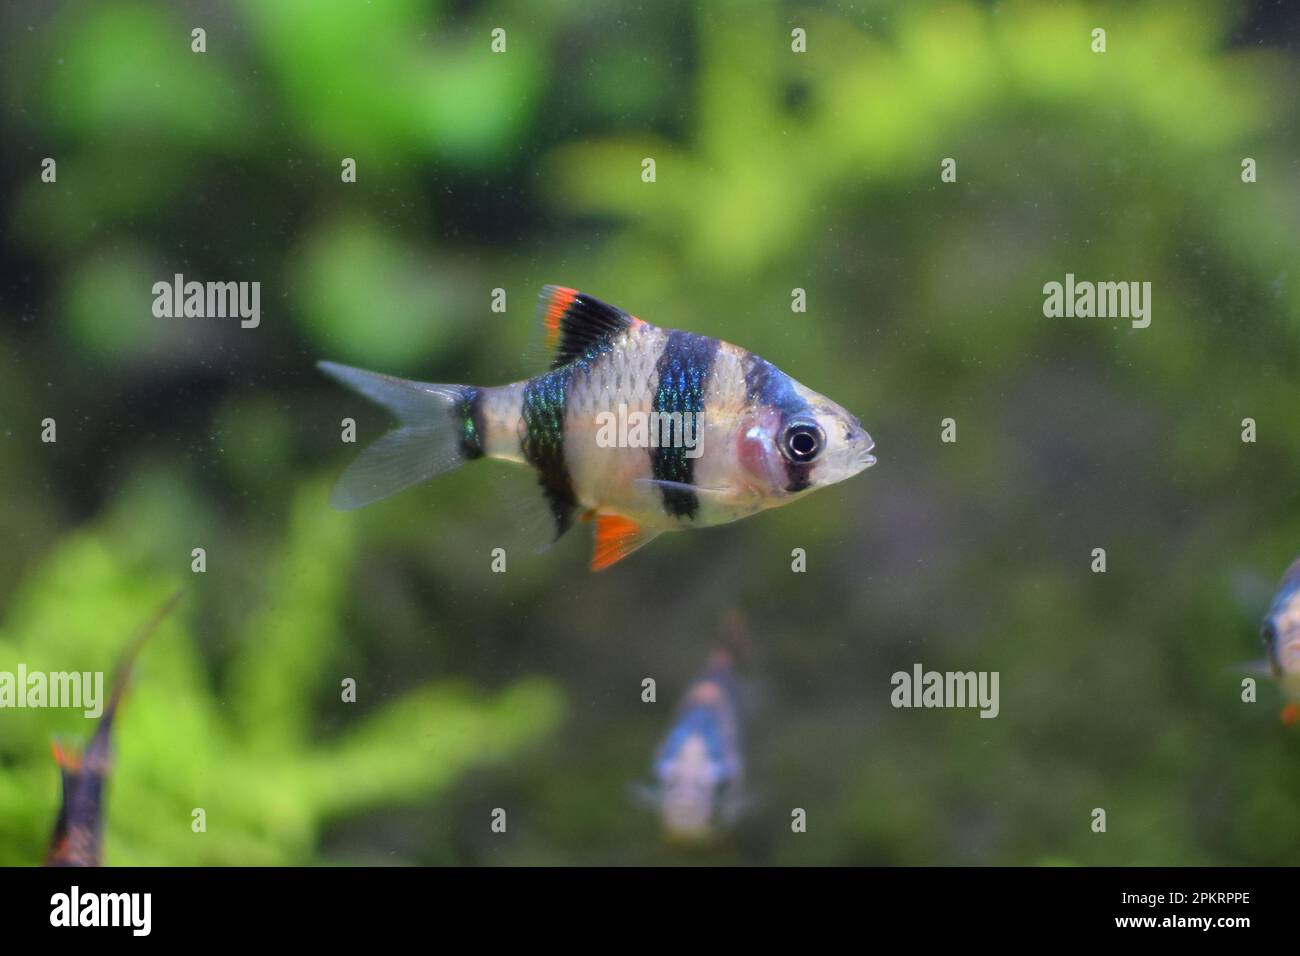 Sumatran barb in the aquarium, close-up view of the fish. Stock Photo